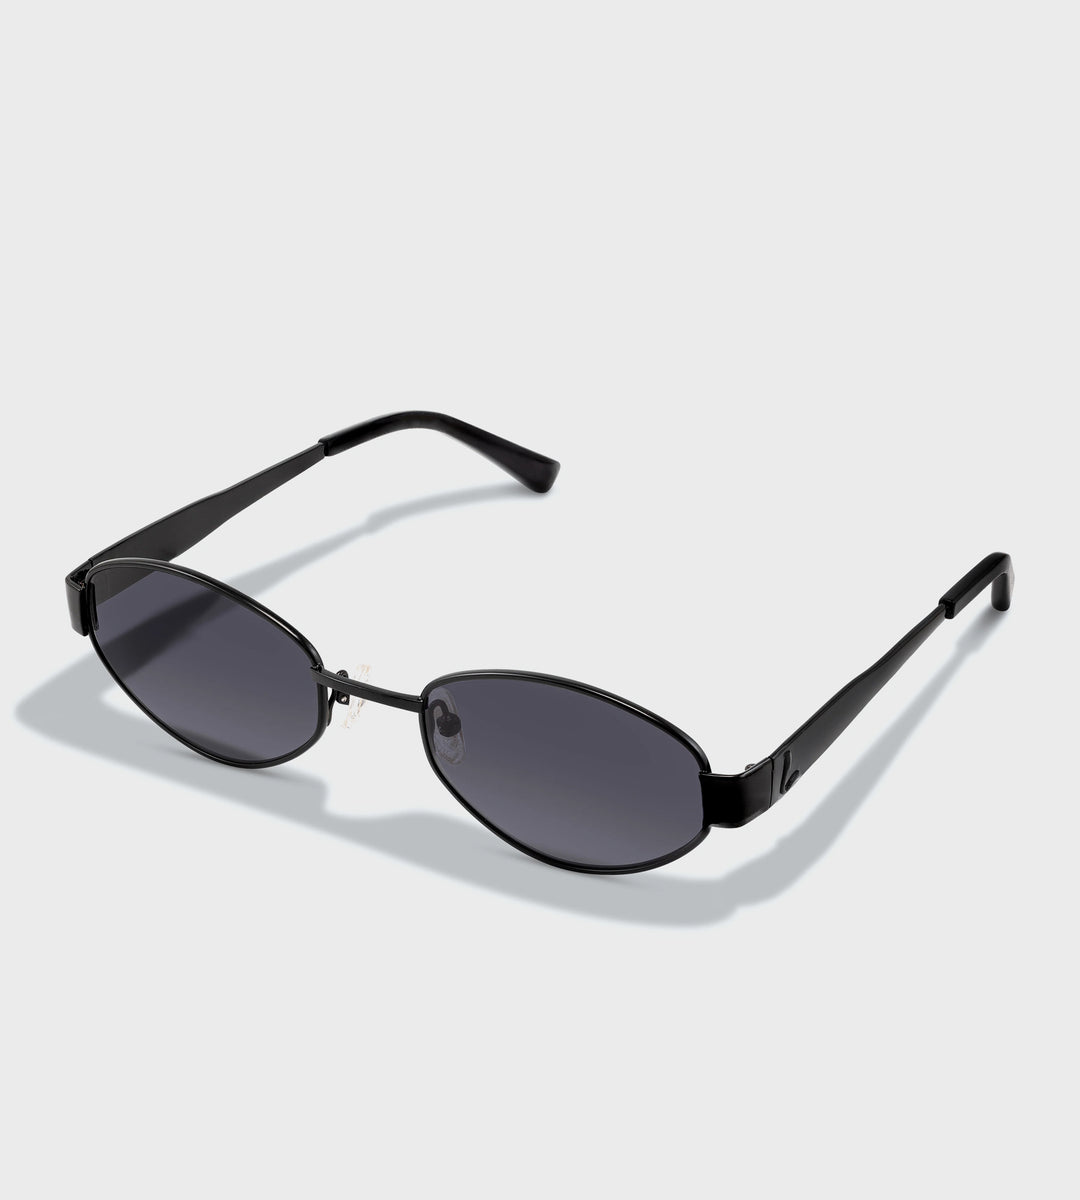 Luv Lou Sunglasses | The Boston | Black